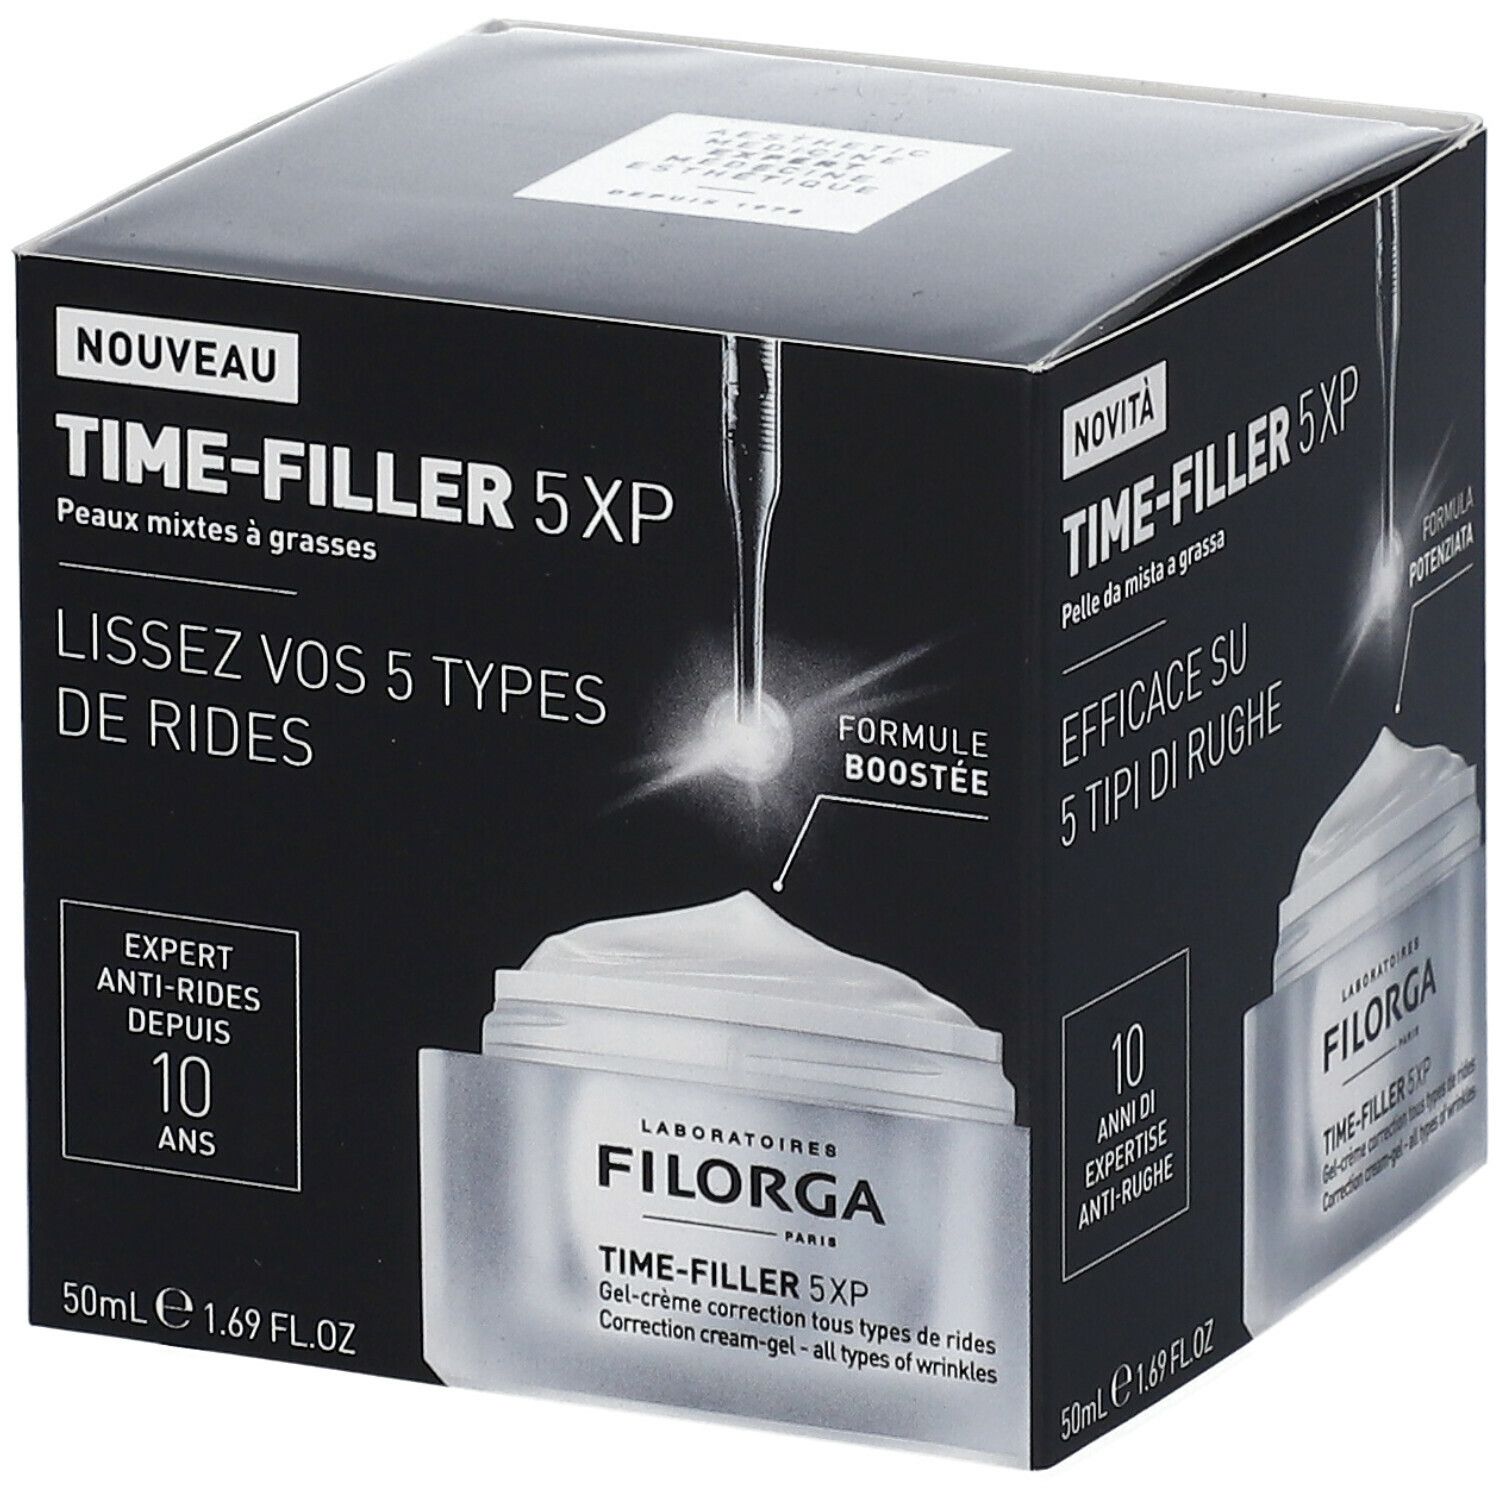 Filorga Time-Filler 5XP Gel-crème Correction